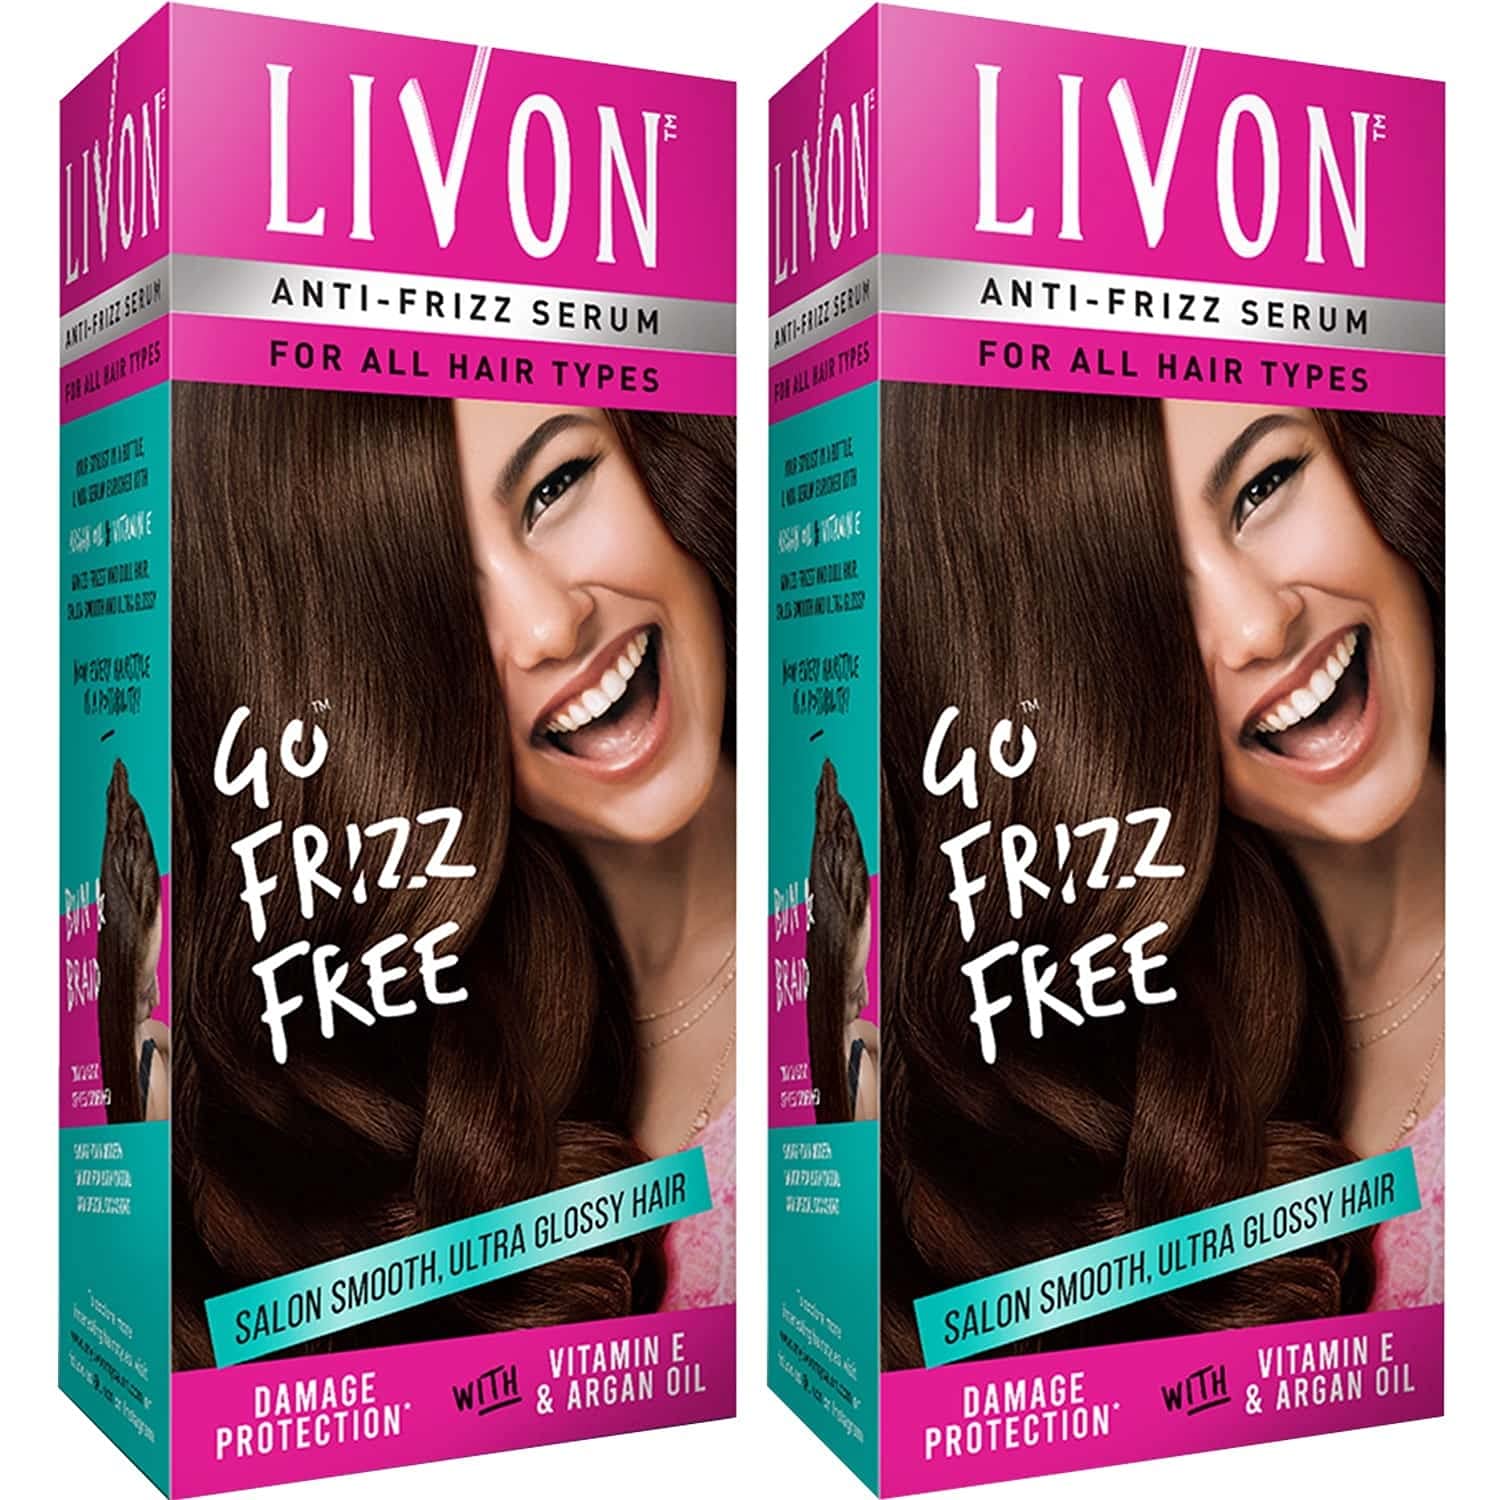 Livon Serum Anti-frizz Serum - For All Hair Types, Damage Protection, With Vitamin E & Argan Oil (50ML each) - Pack of 2, best hair serum,Livon Serum Anti-frizz Serum 